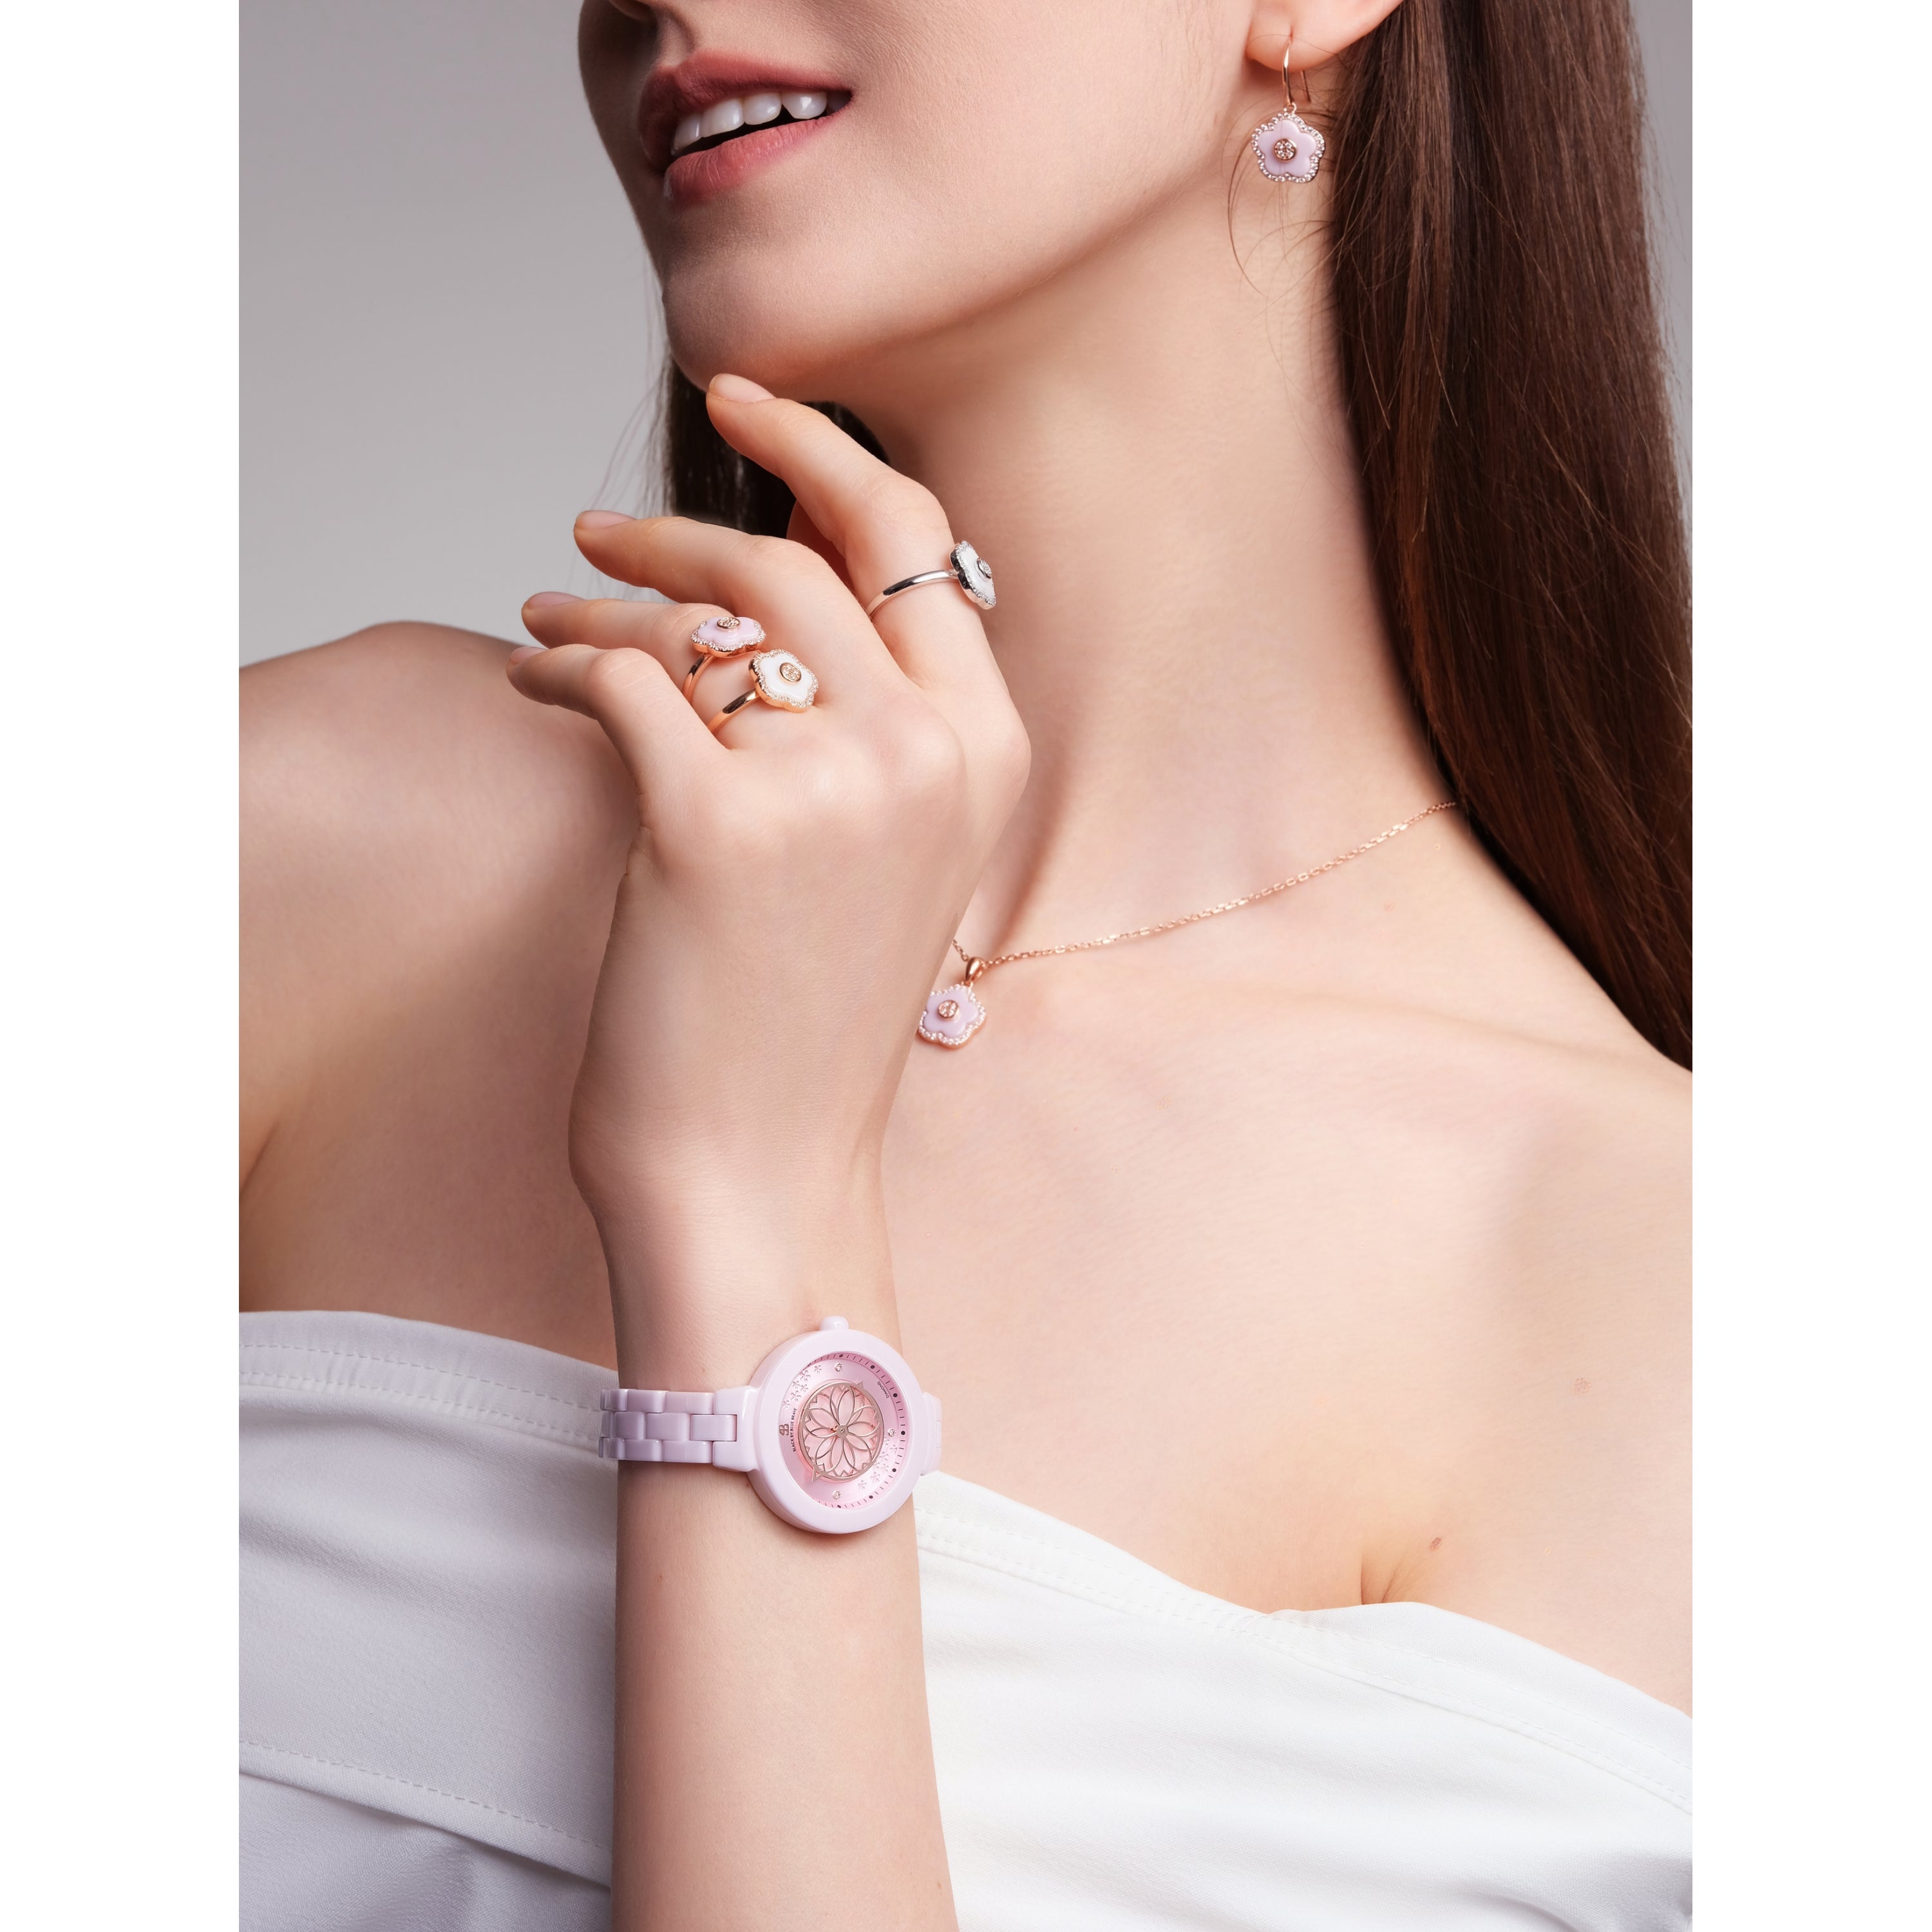 Pink Diamond Cherry Blossom Ceramic Watch With Flower Ceramic Earrings